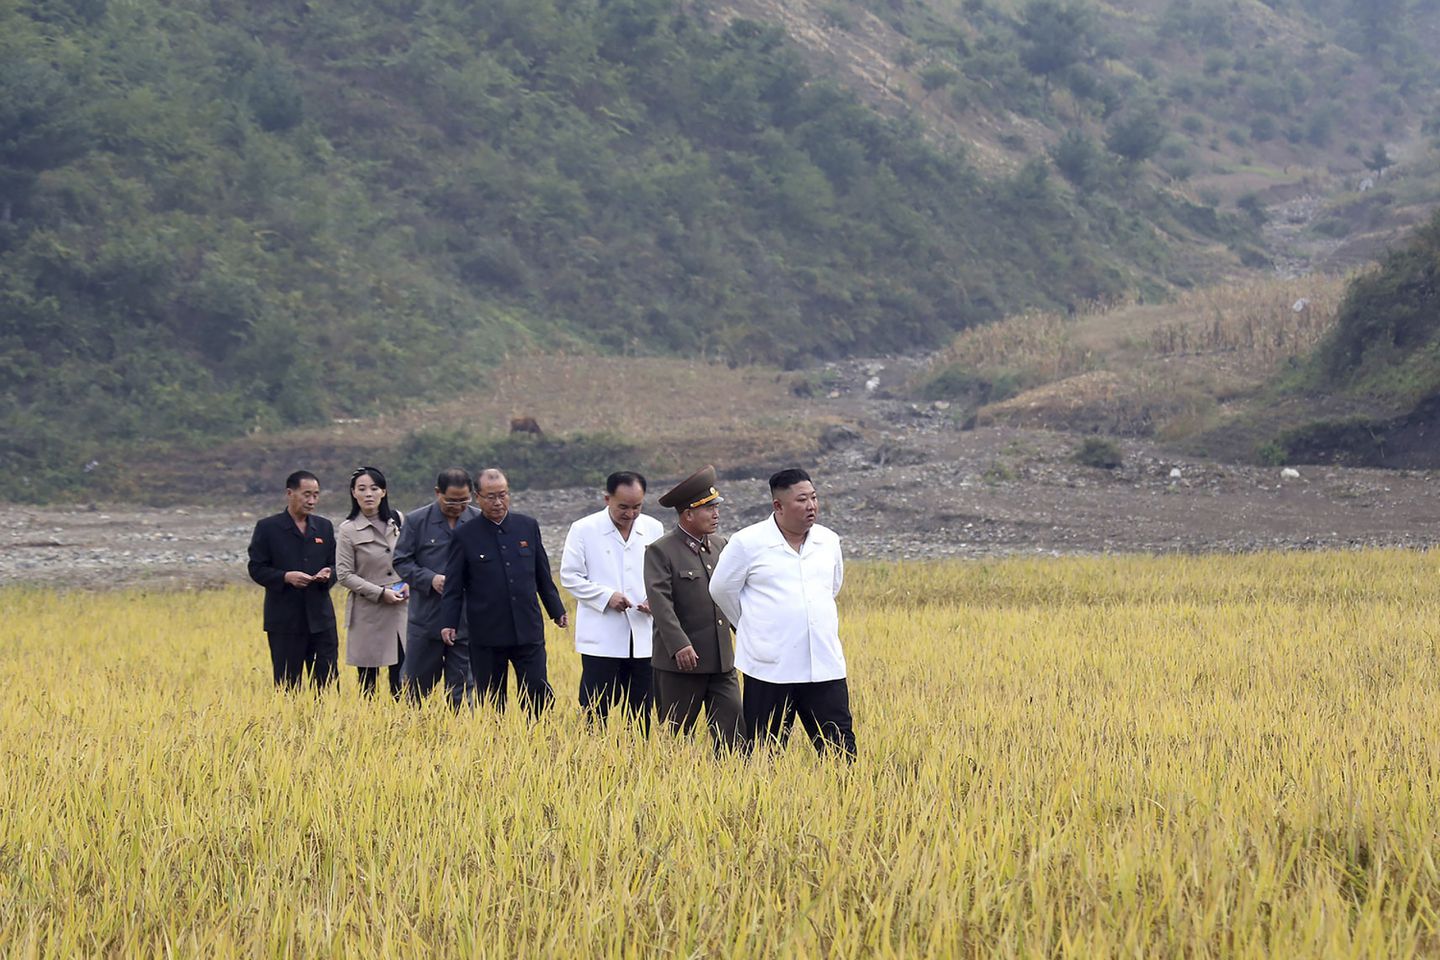 Kim Jong Un admits North Korea is facing tense food situation